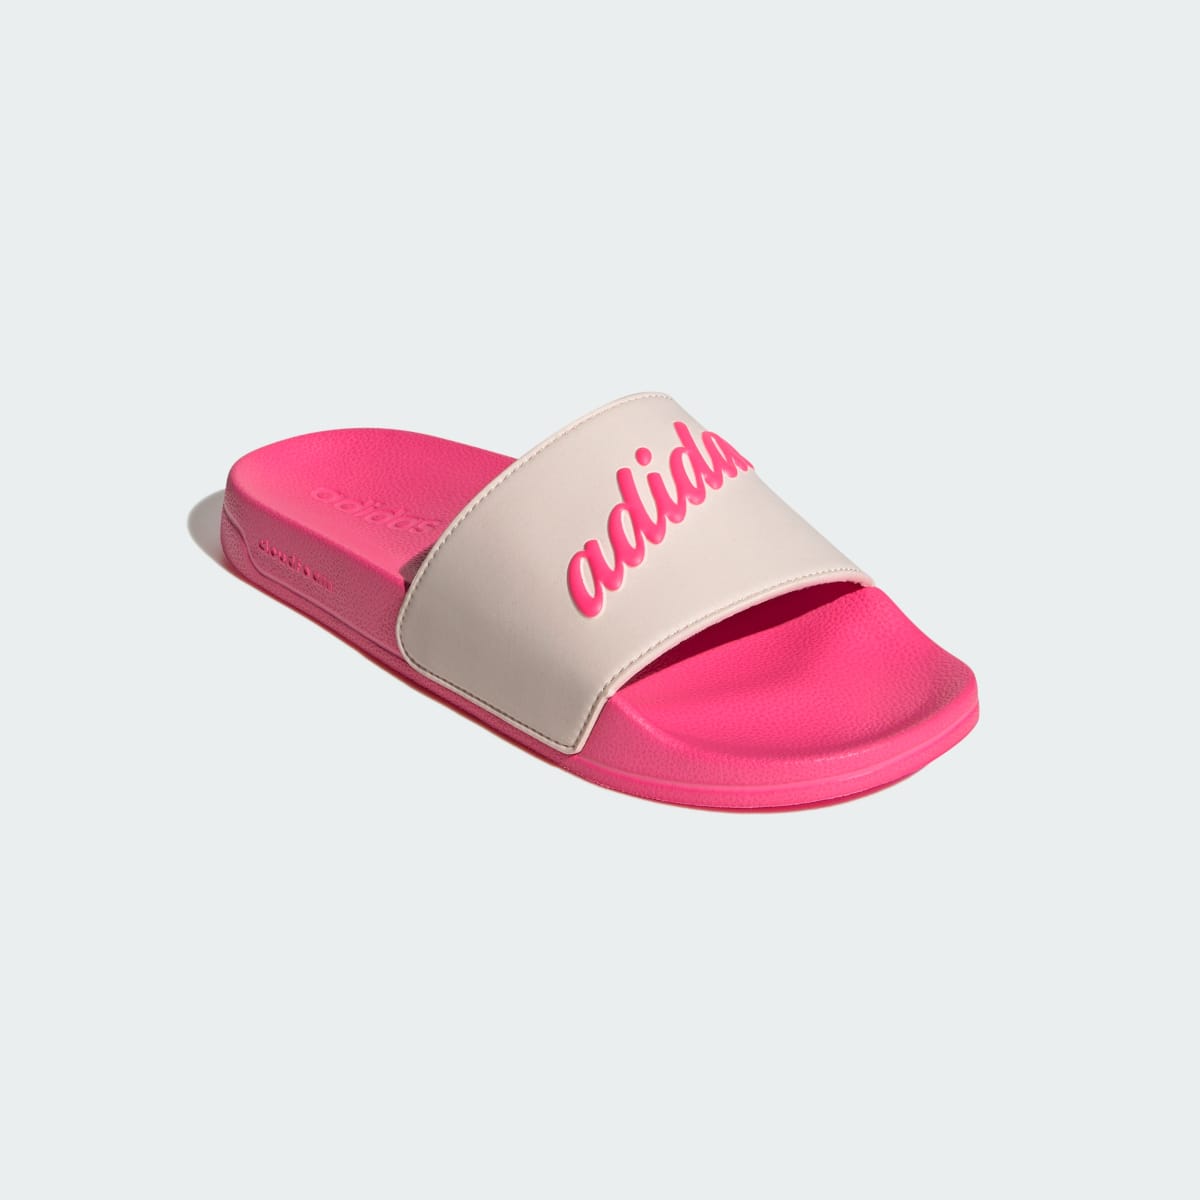 Adidas Adilette Shower Slides. 5